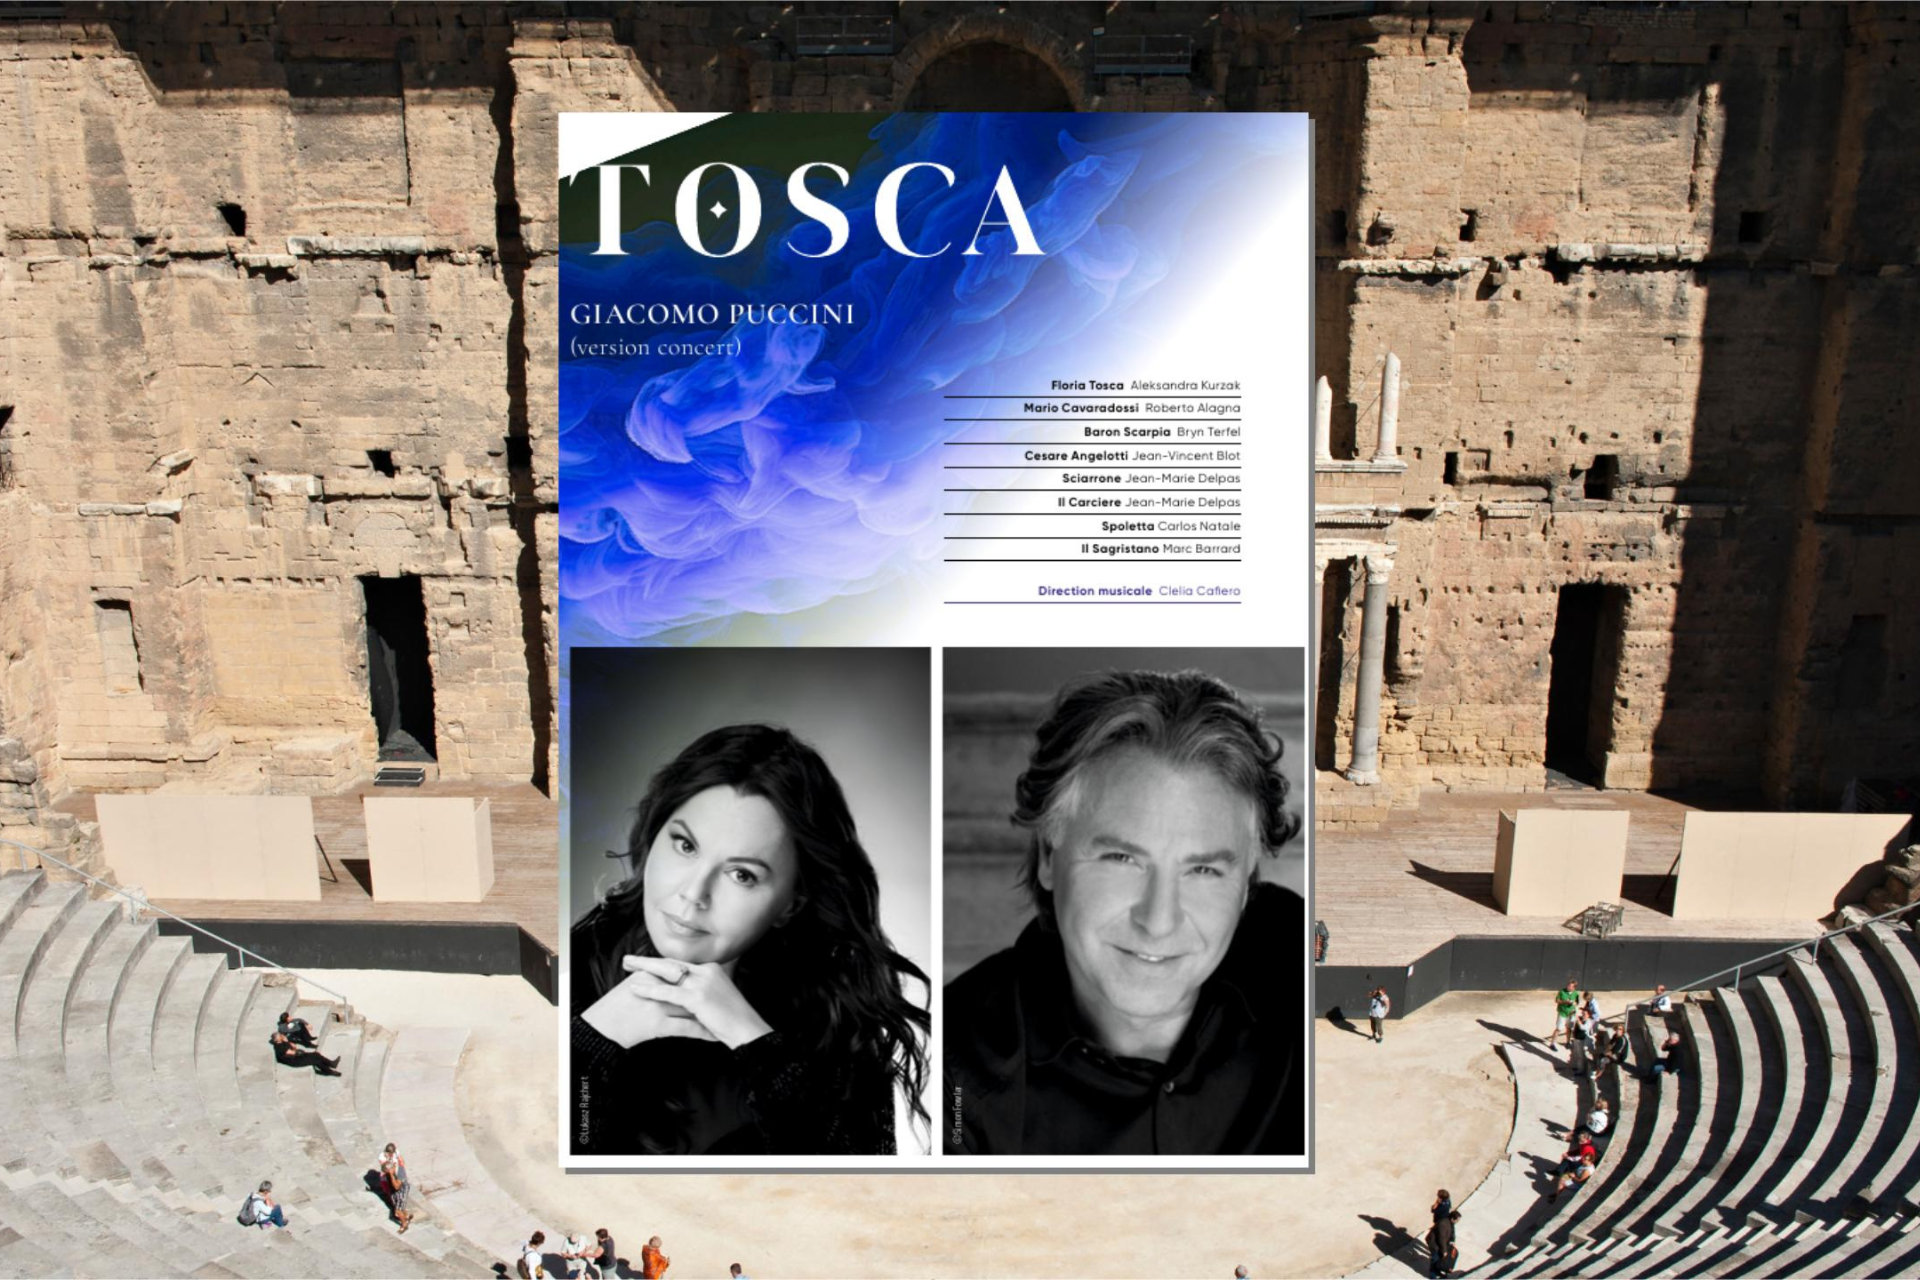 GCDA-TOSCA de G. Puccini - version concert